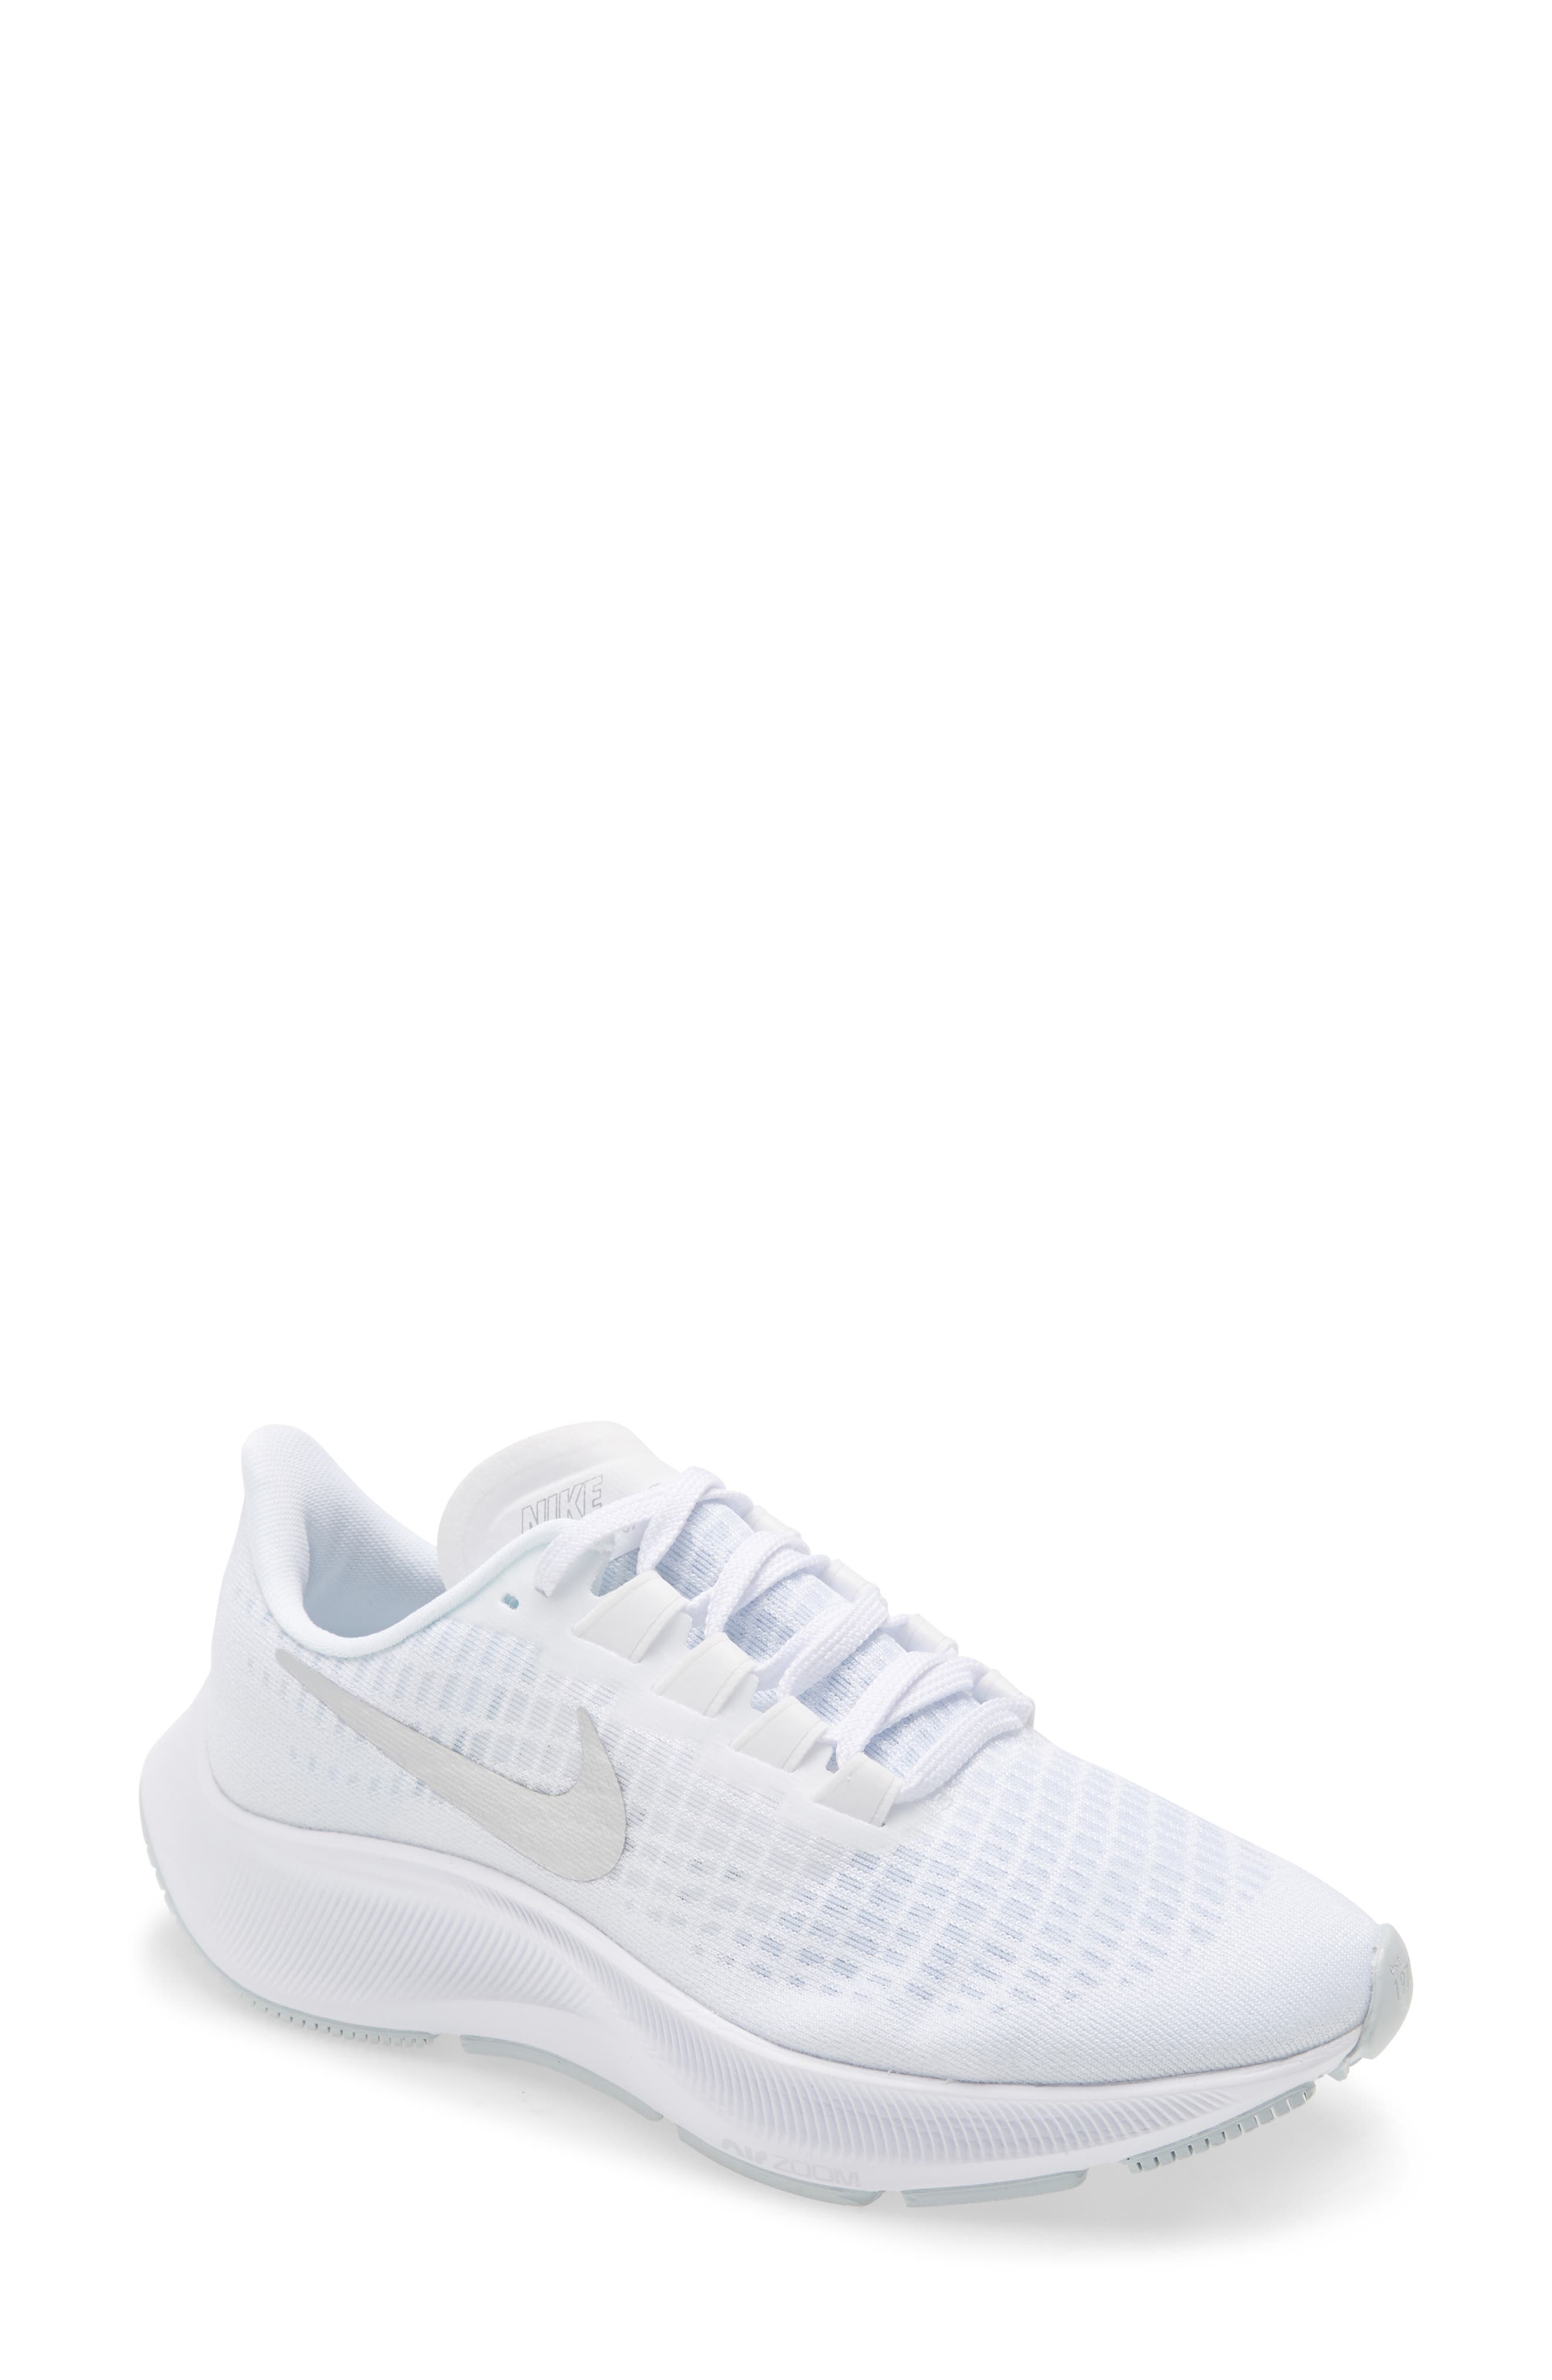 white nike sneakers for ladies